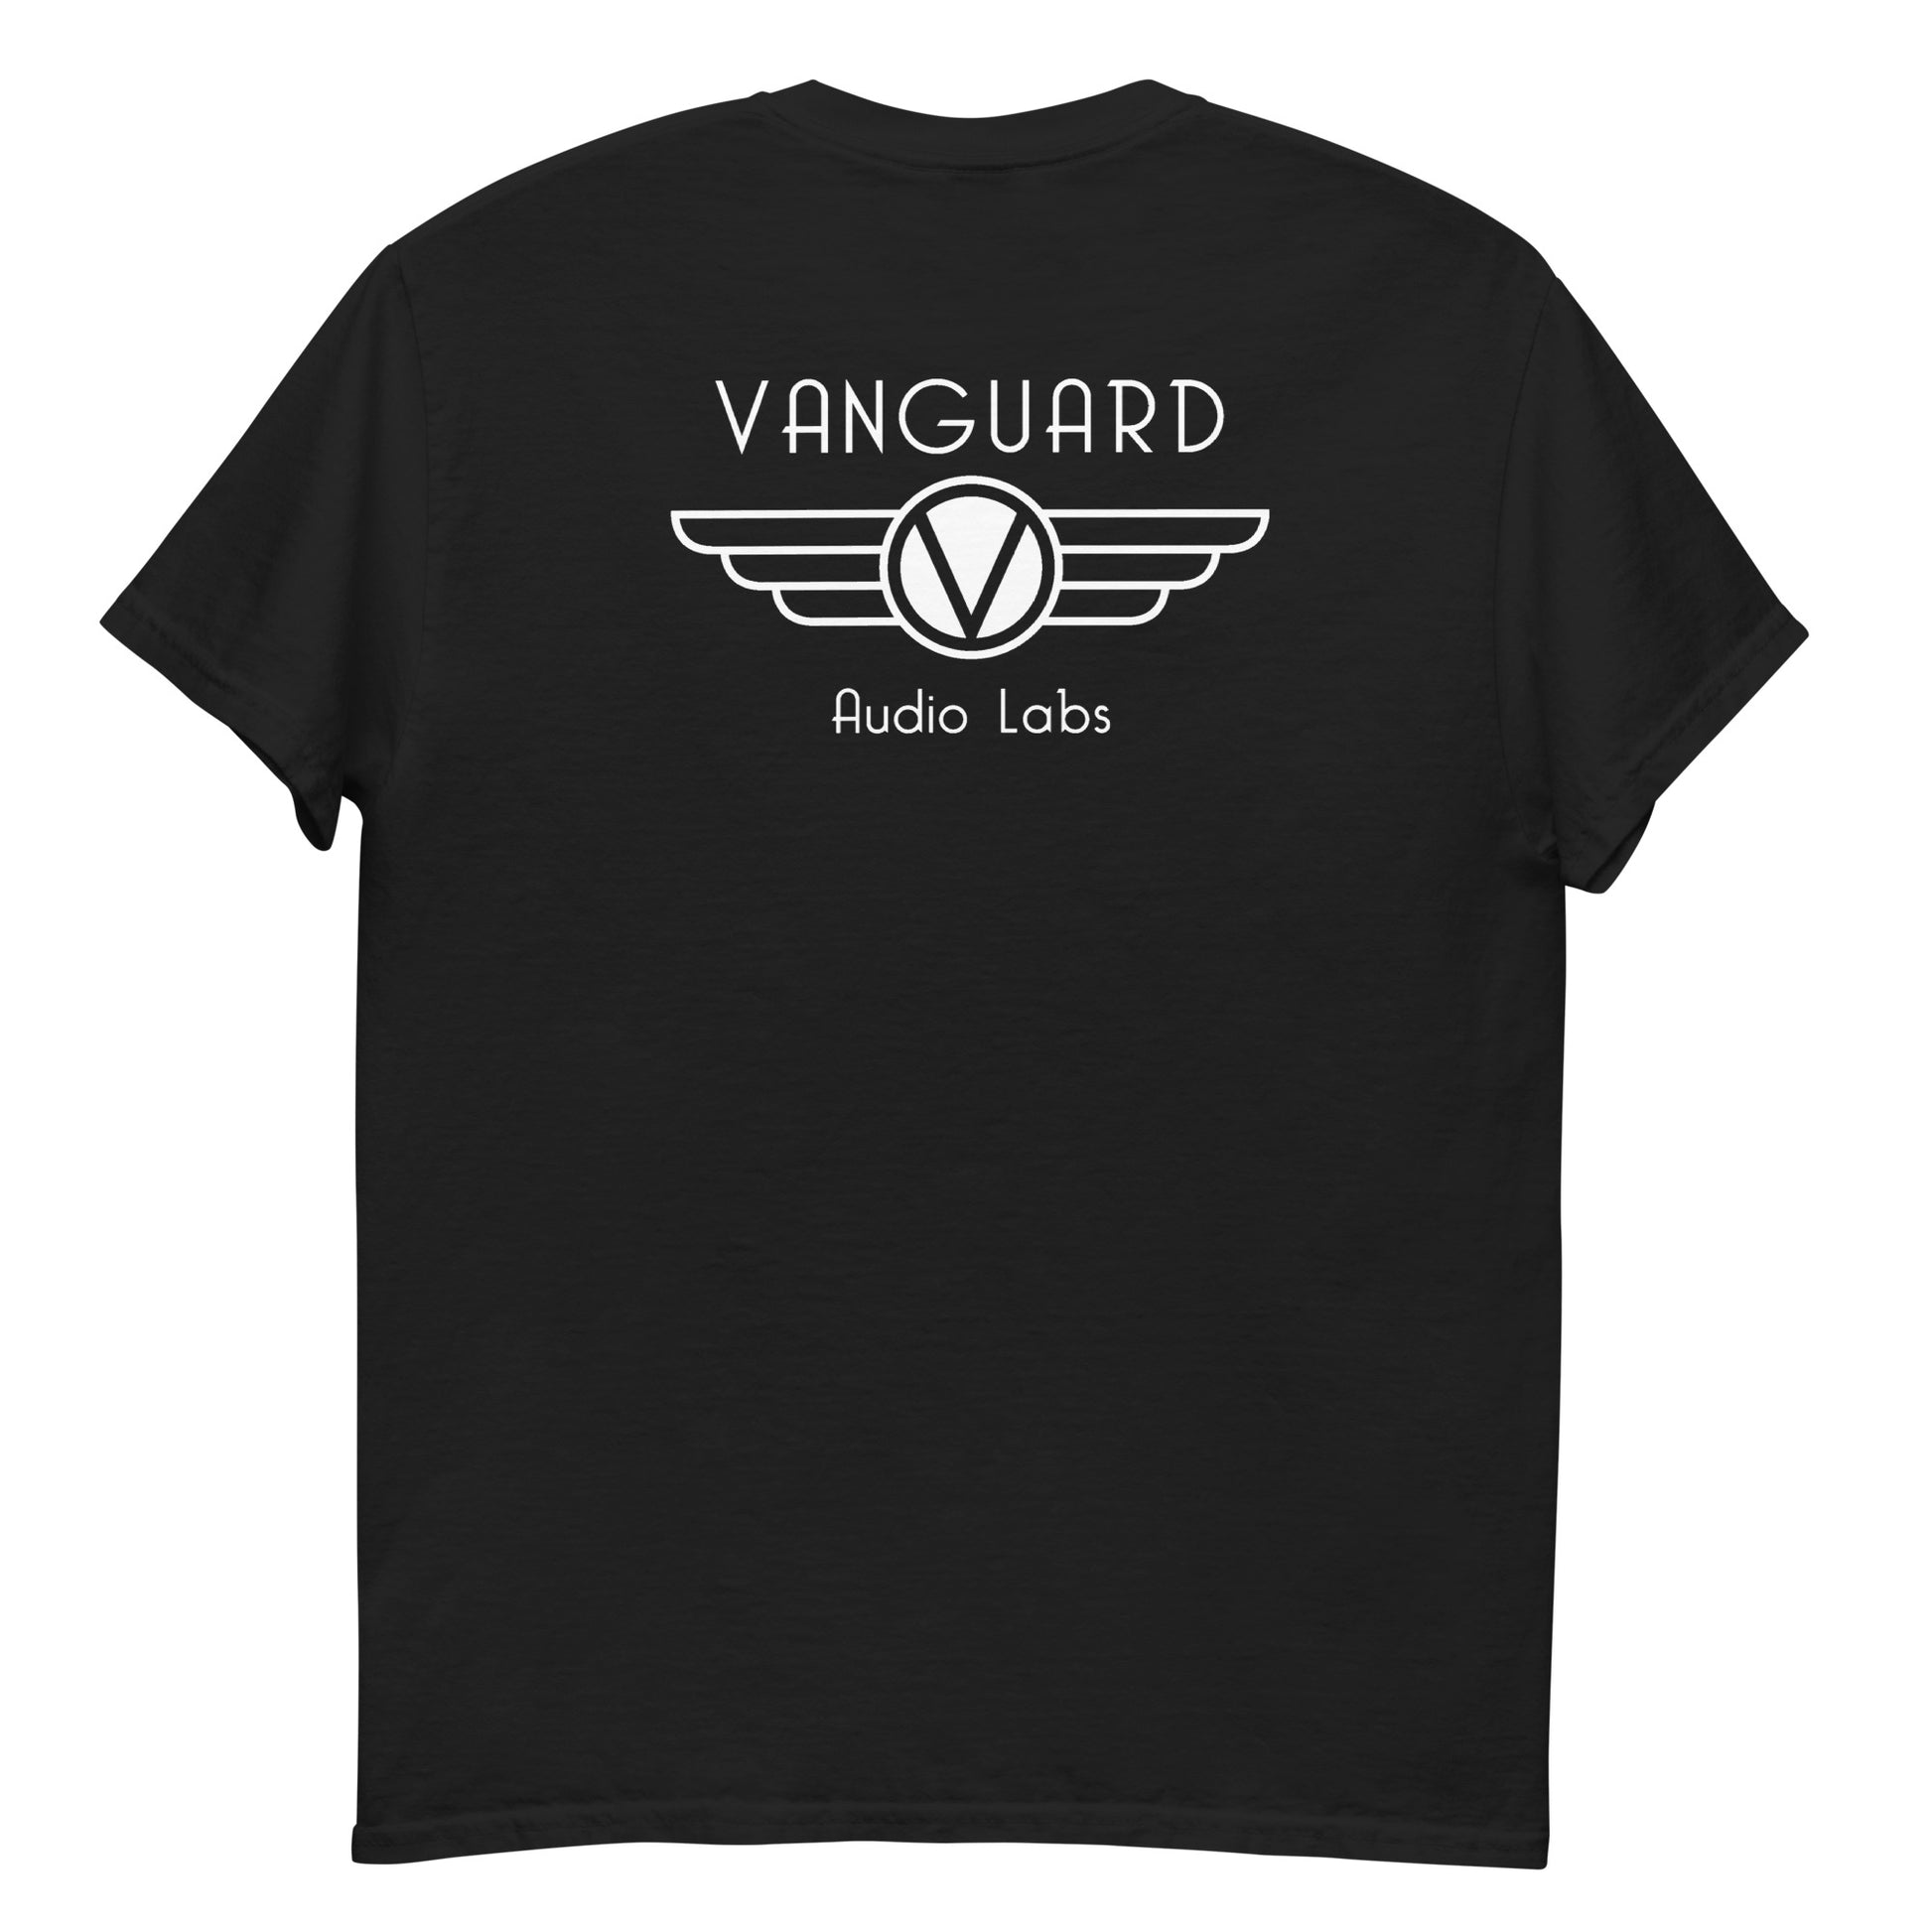 Vanguard Classic tee - Vanguard Audio Labs